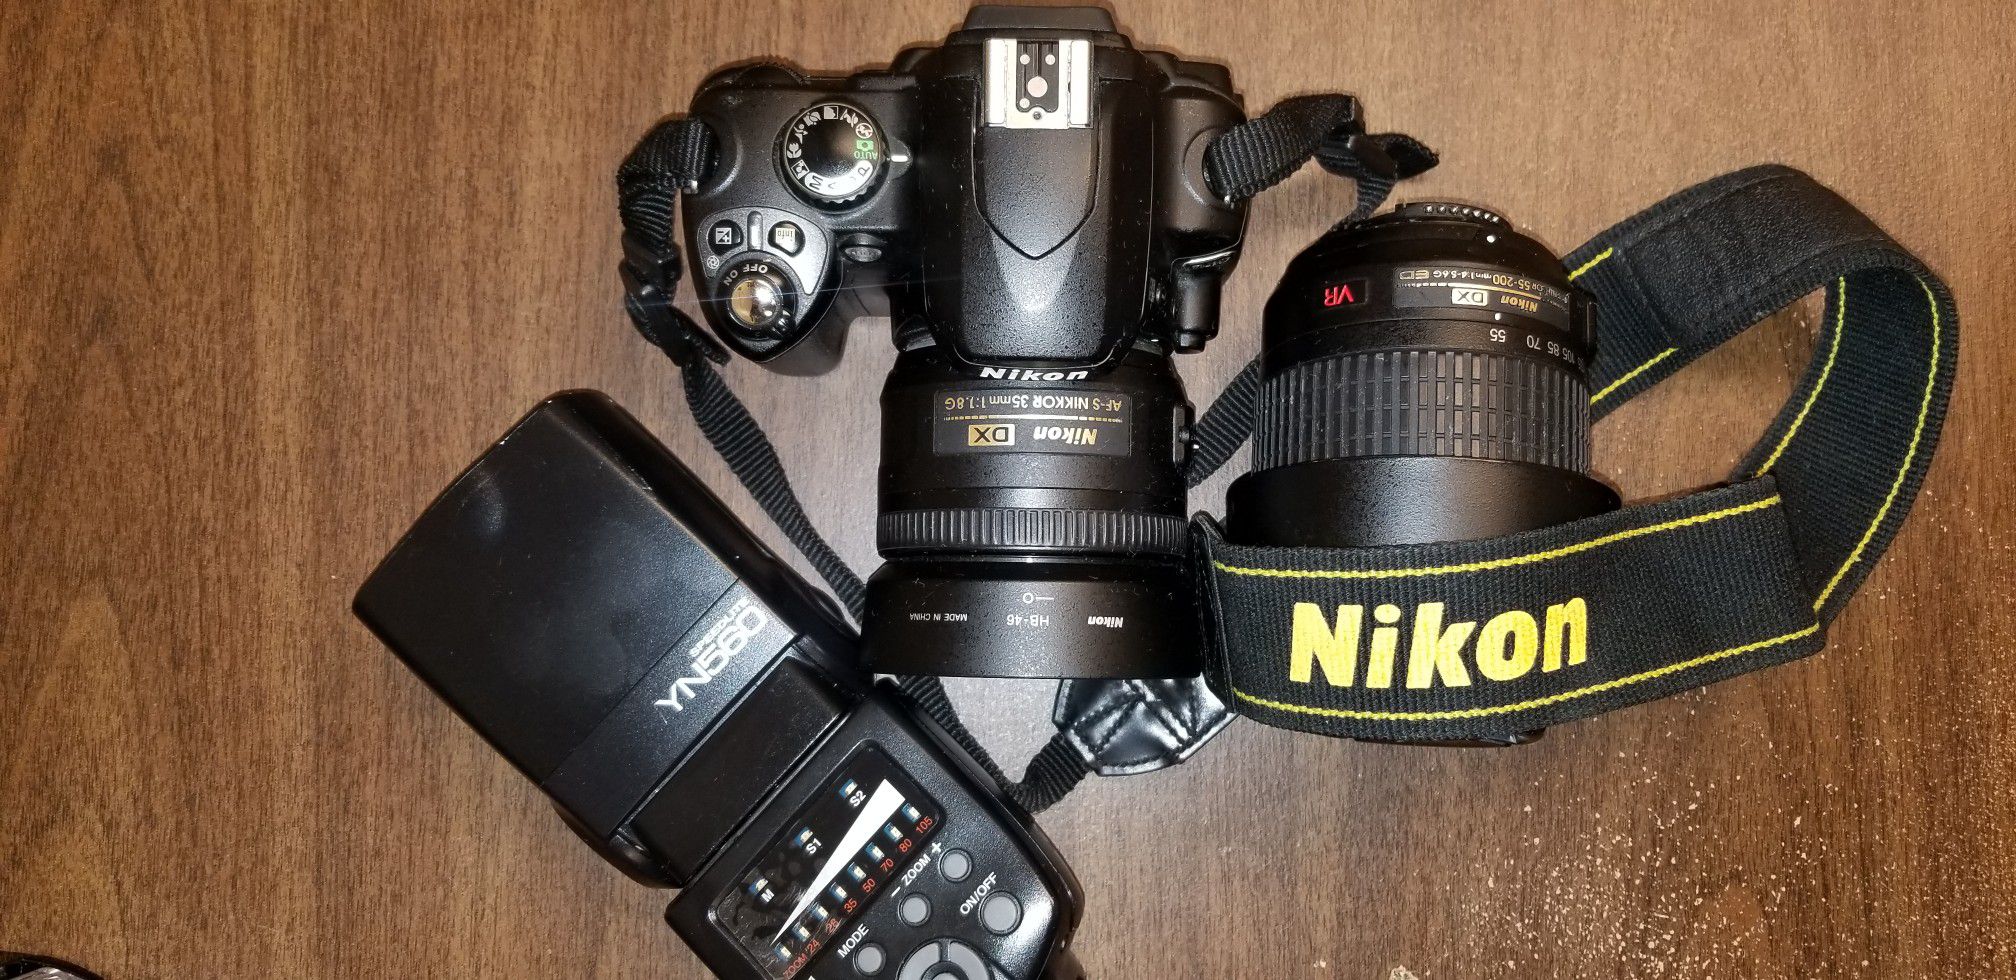 Nikon D40 with Lenses $300 OBO